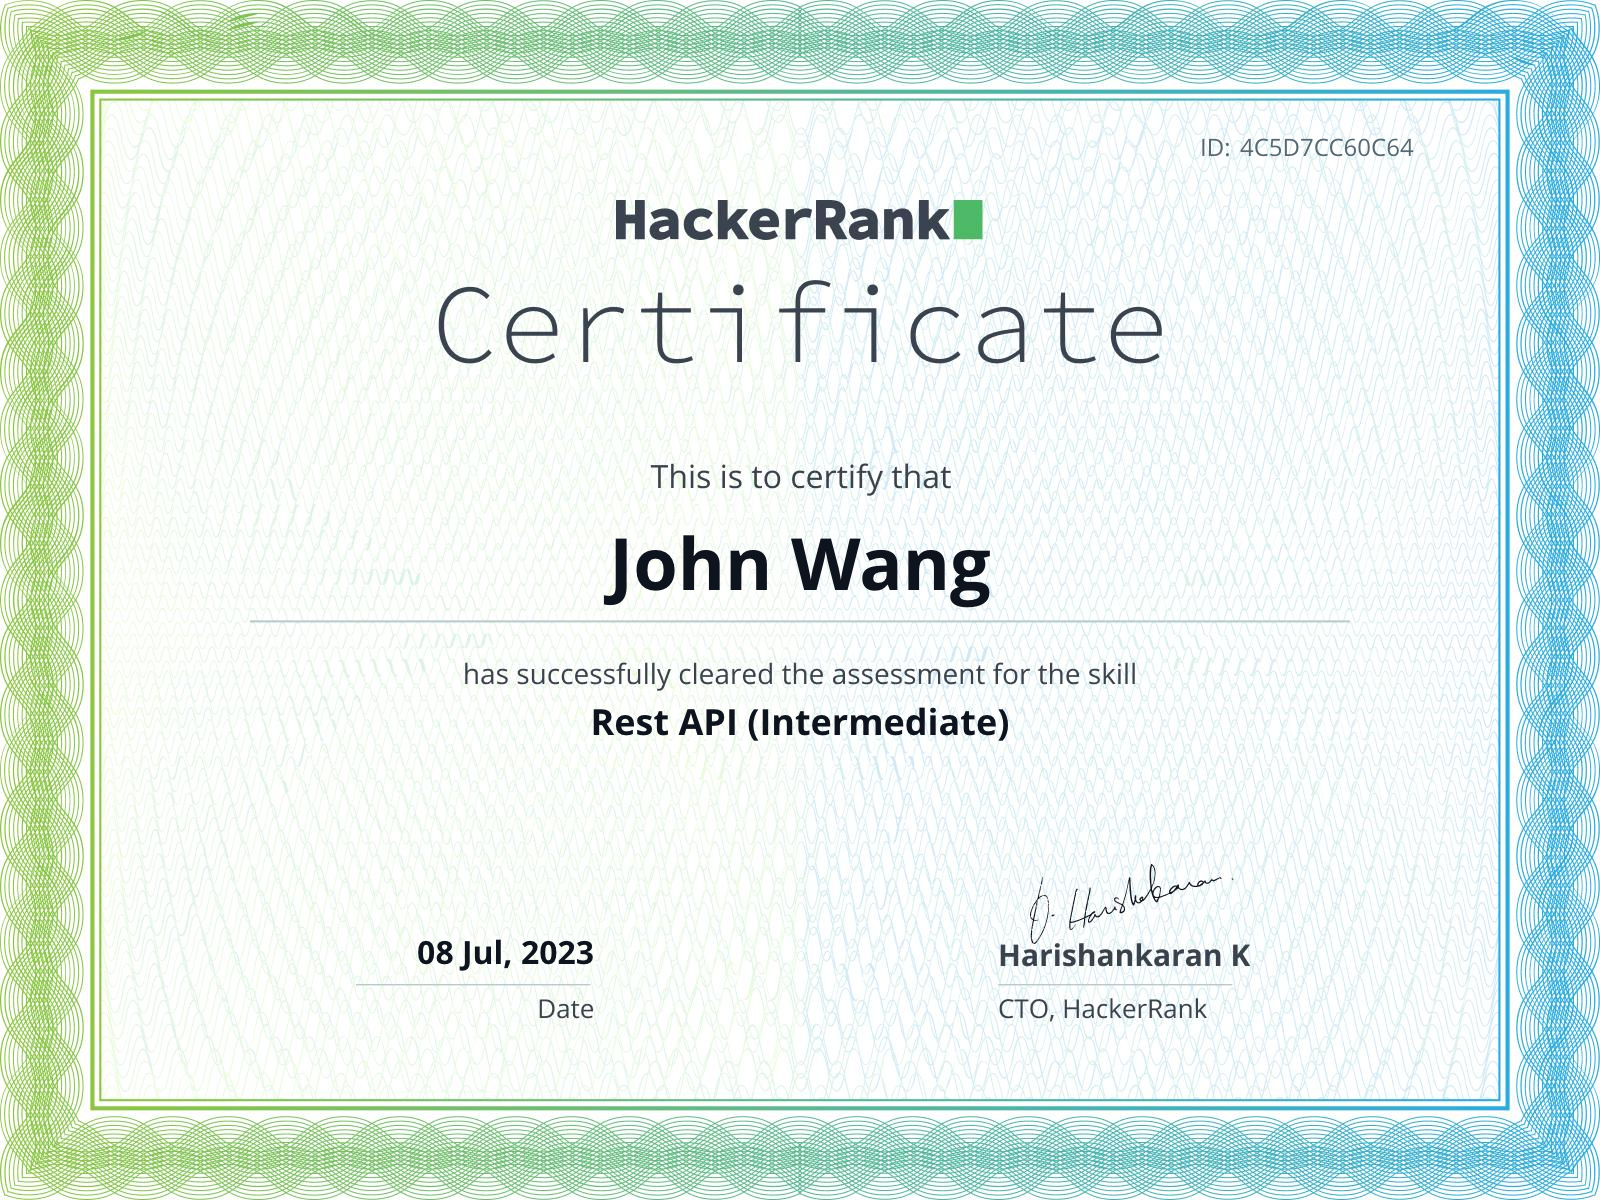 John's Rest API (Intermediate) from HackerRank